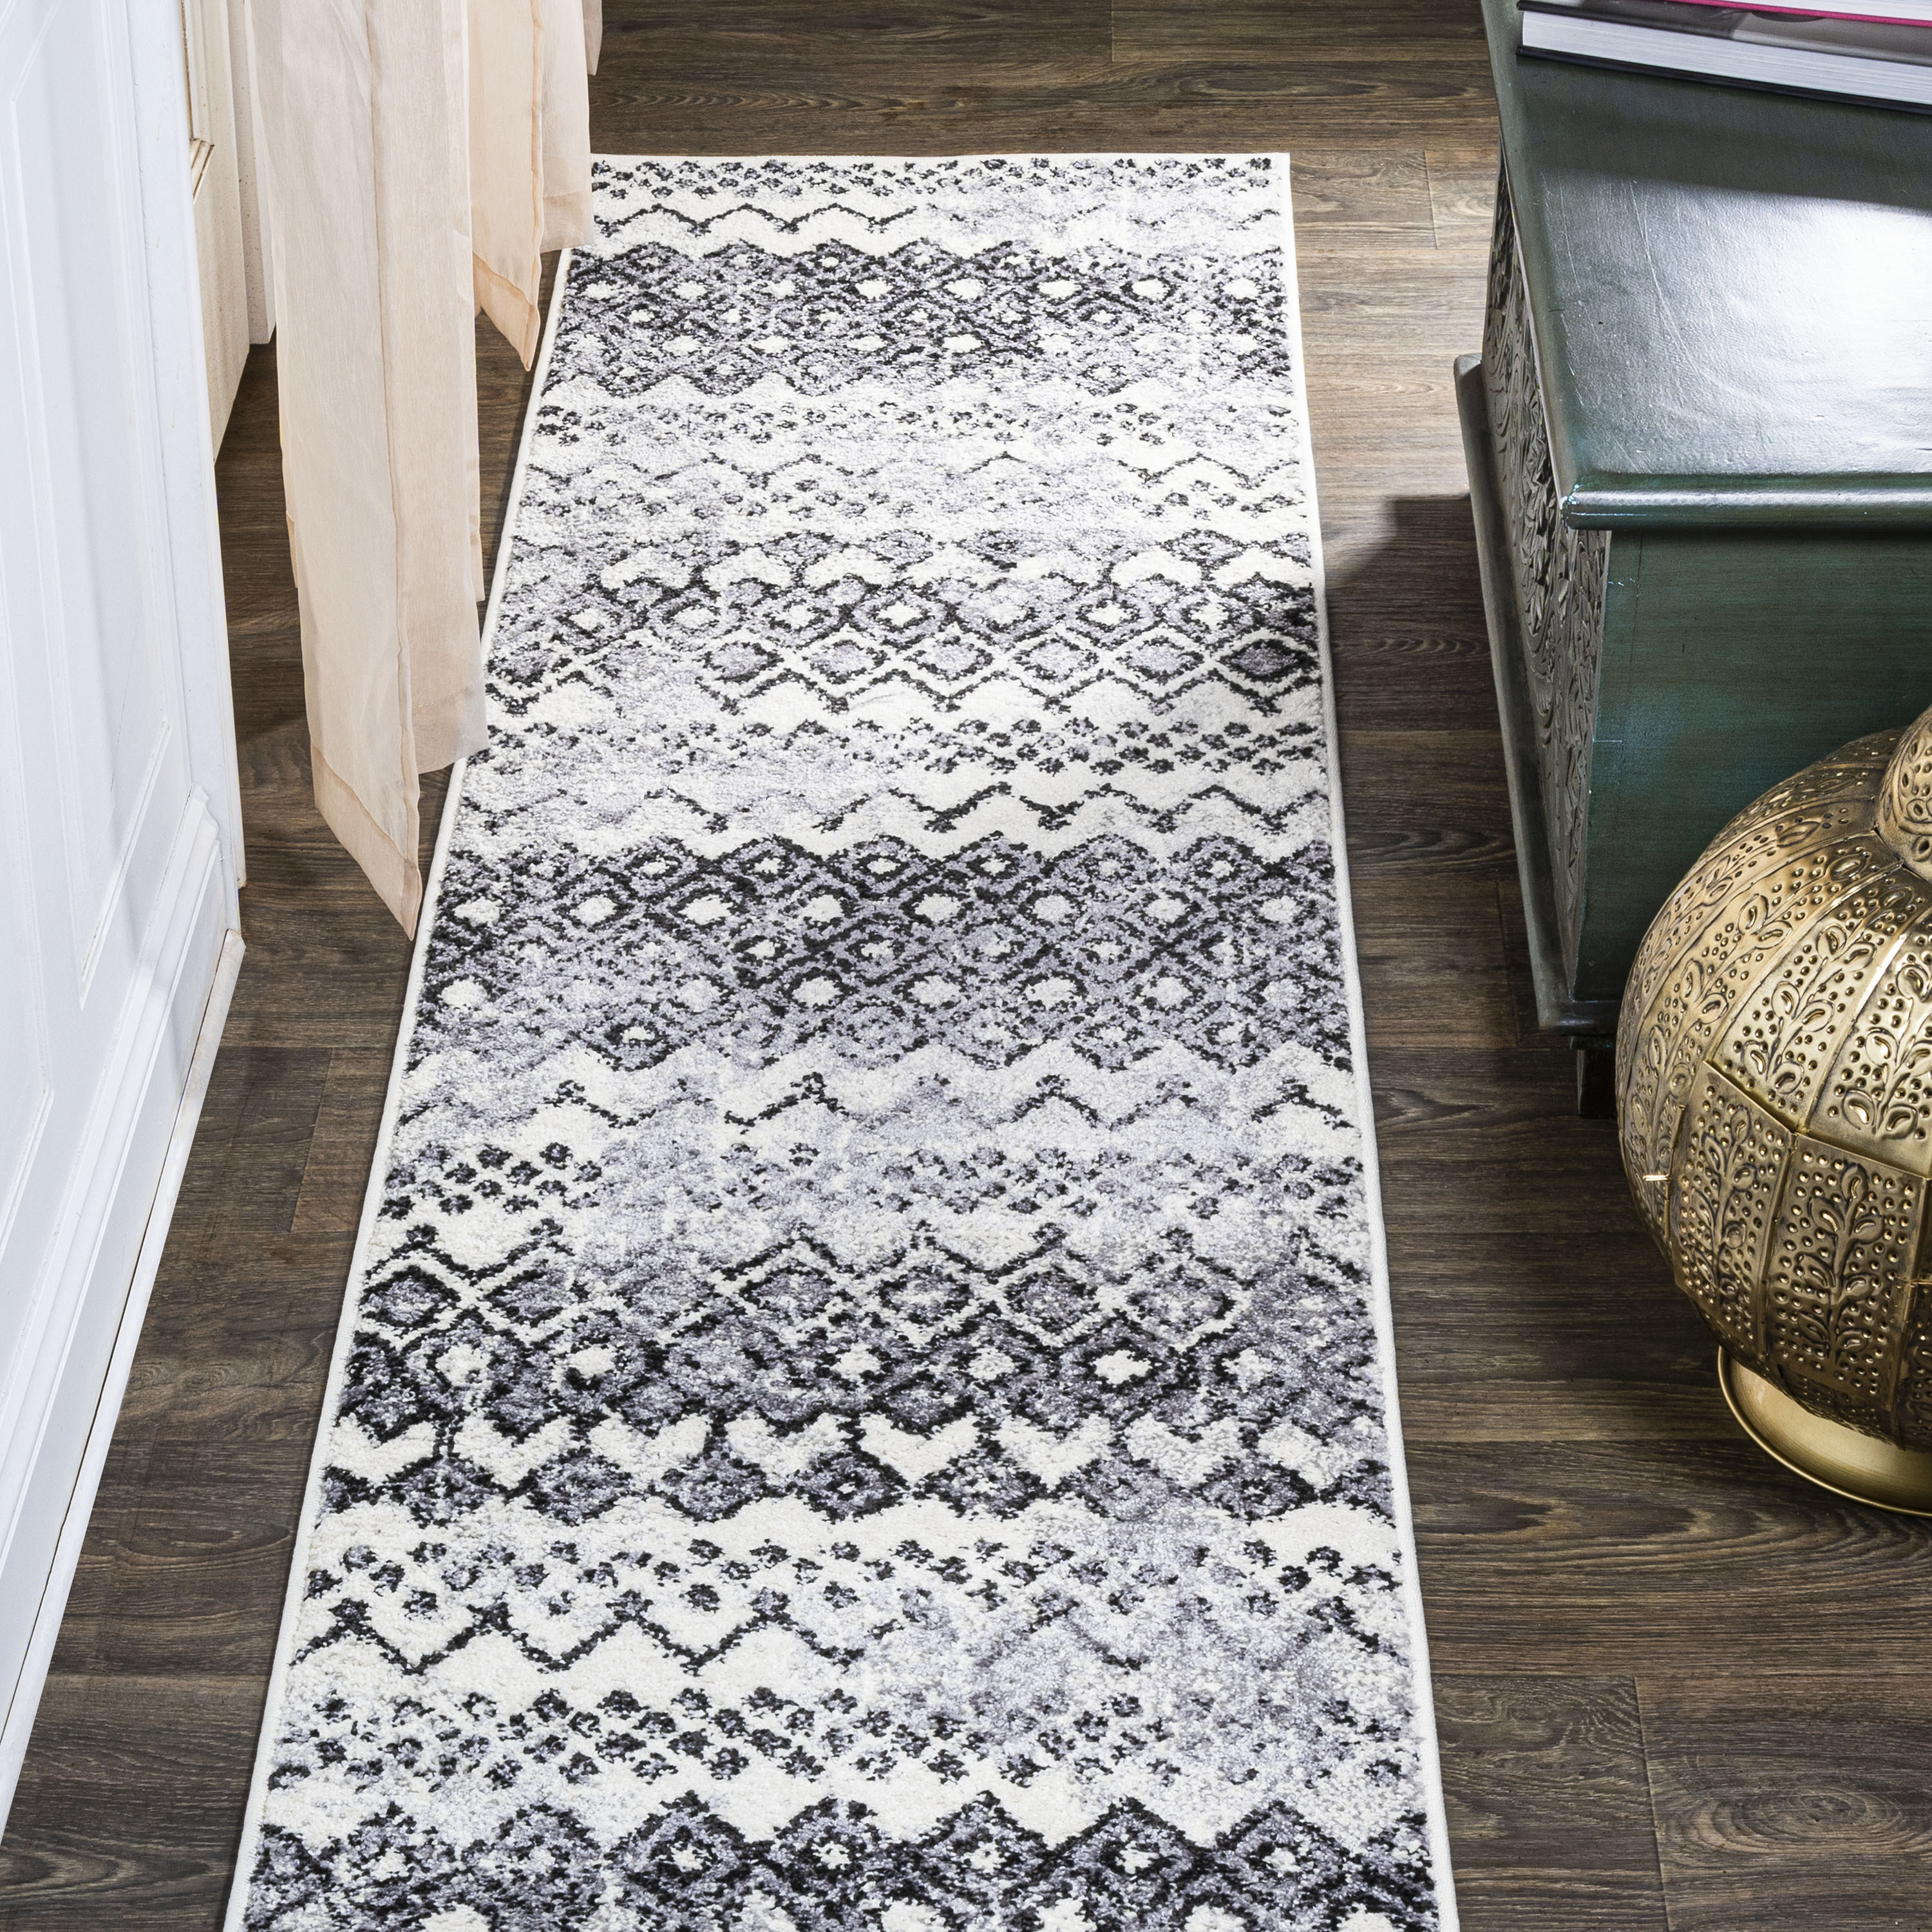 Moroccan Vinyl Rug Runner in Tile Effect Pattern for Kitchen 